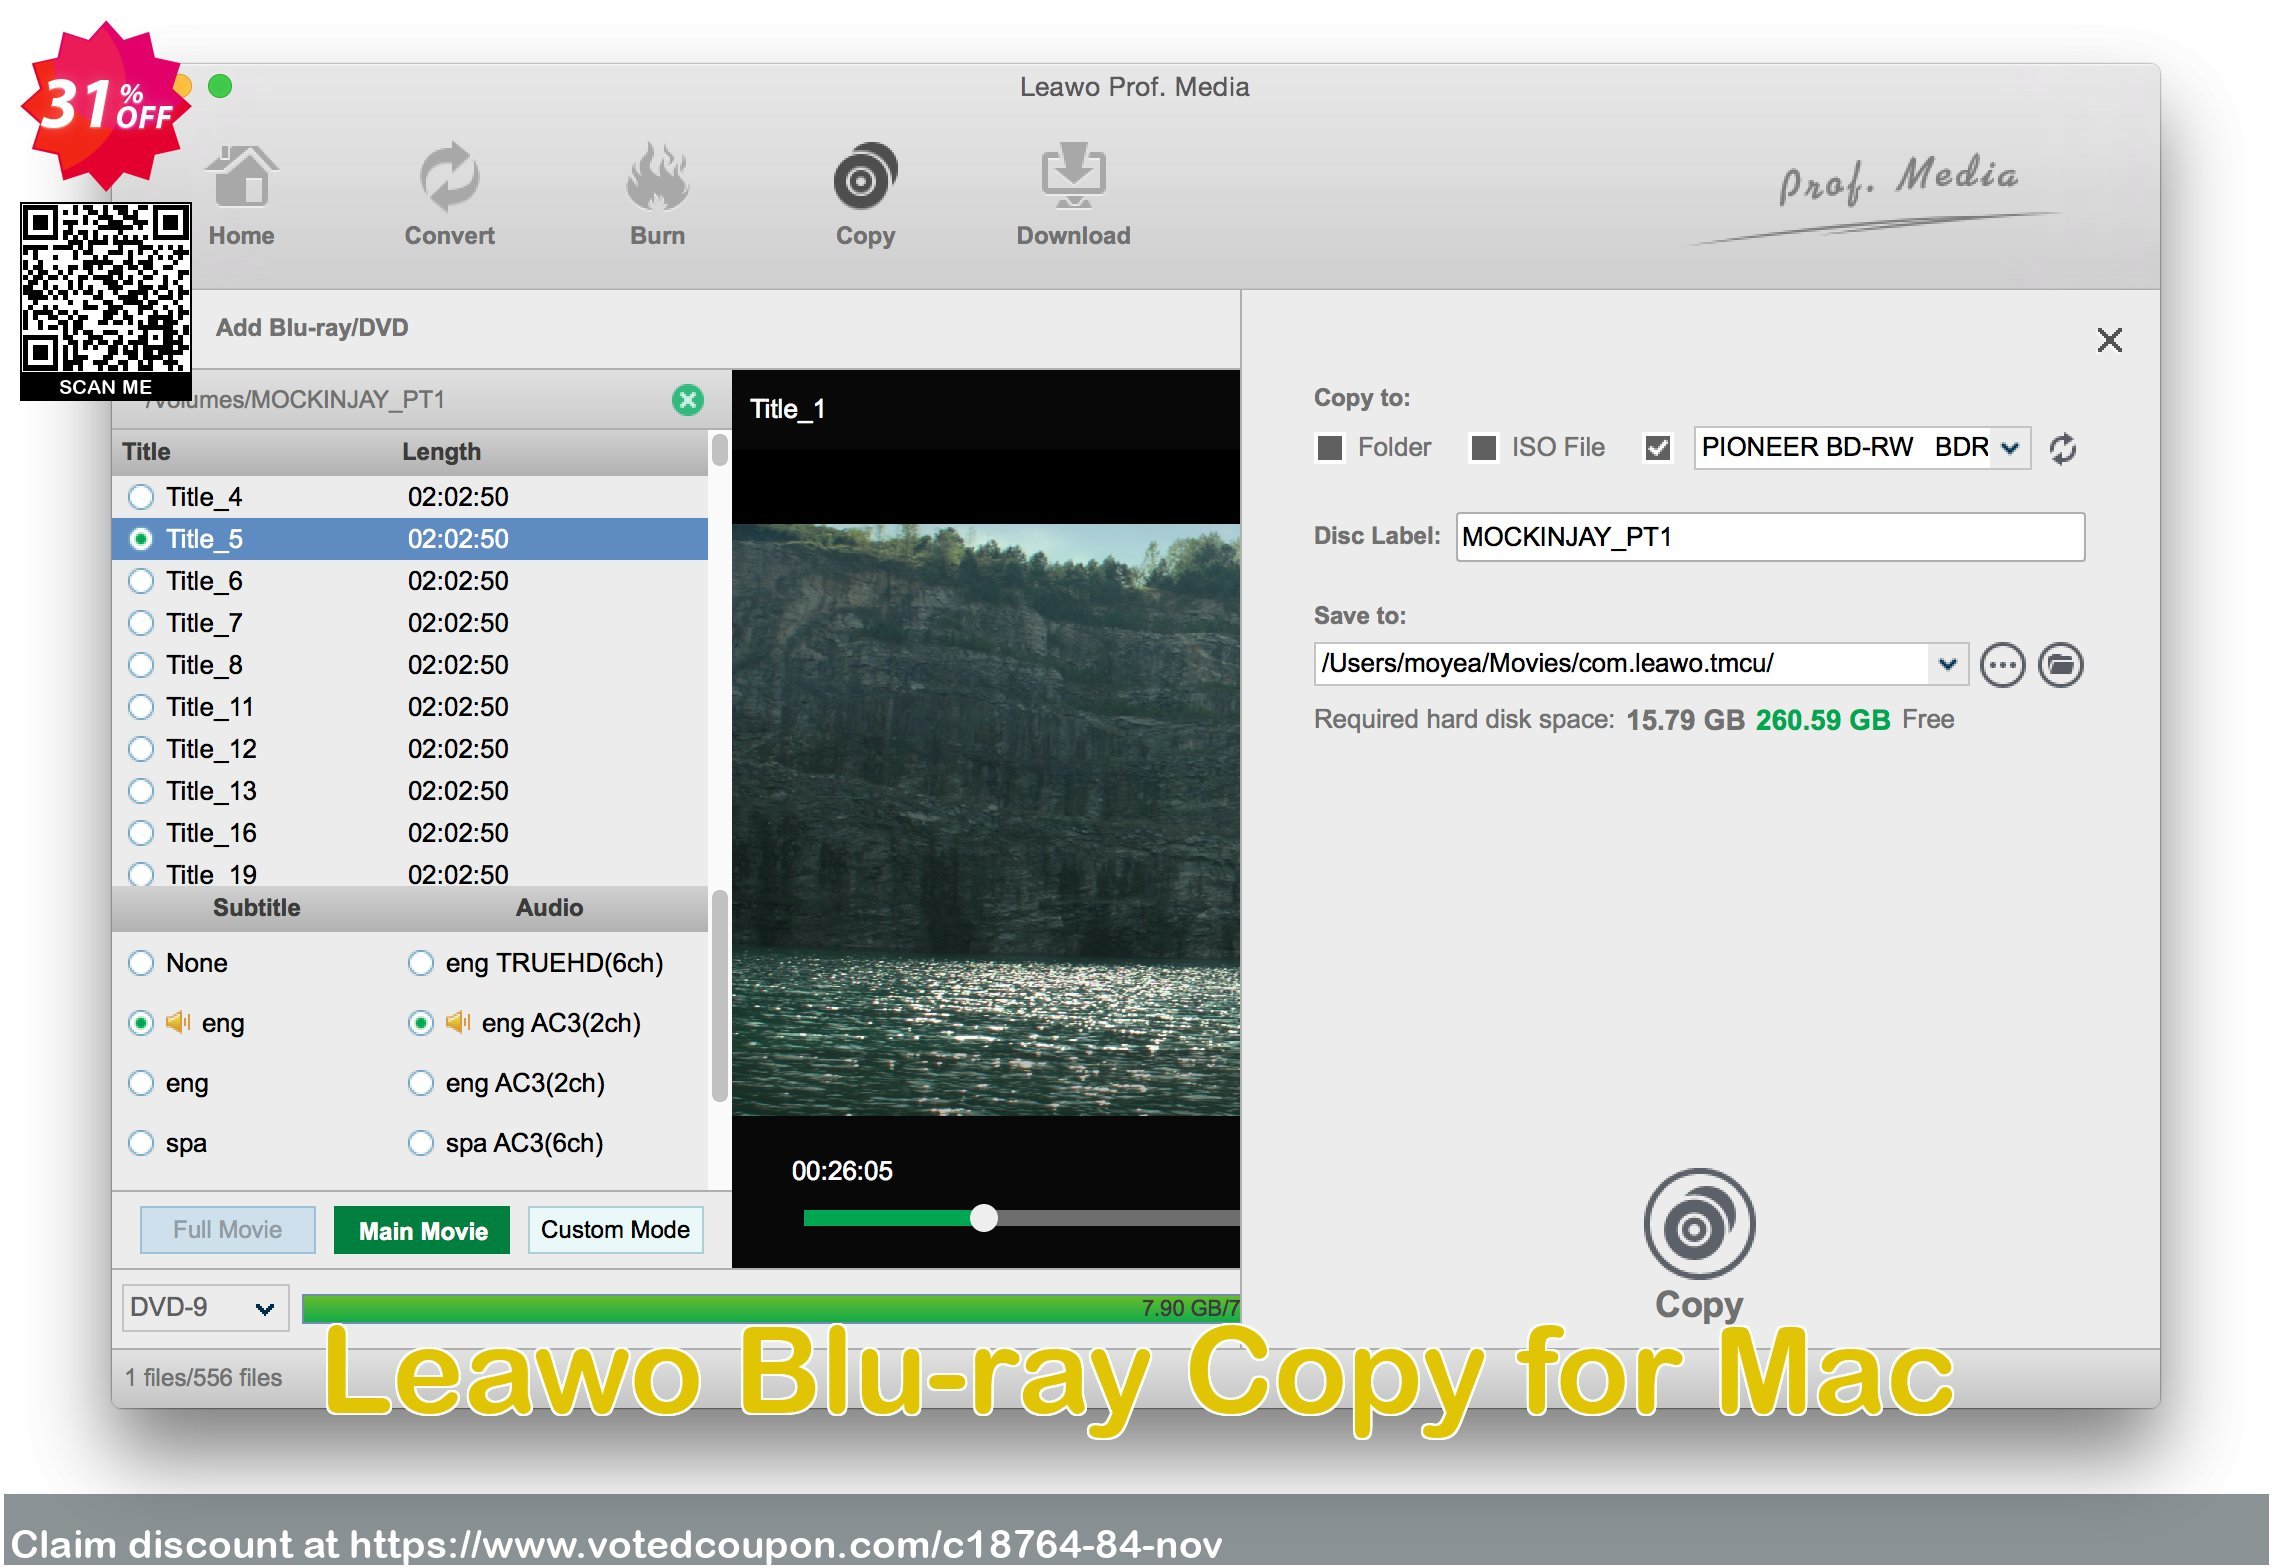 Leawo Blu-ray Copy for MAC Coupon, discount Leawo coupon (18764). Promotion: Leawo discount